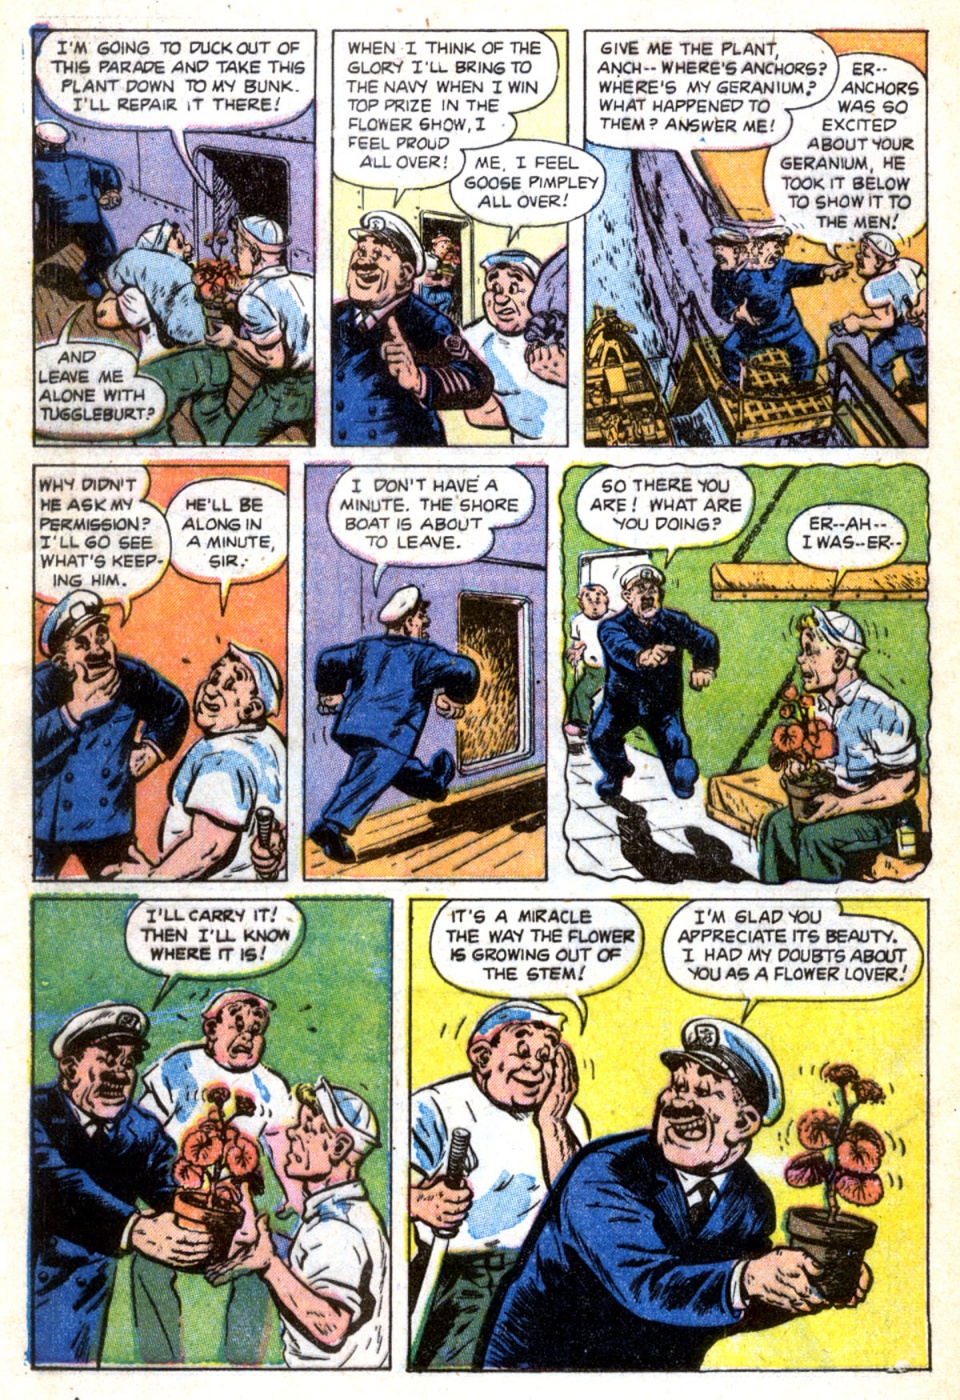 Anchors the Salt Water Daffy - Comics (32)